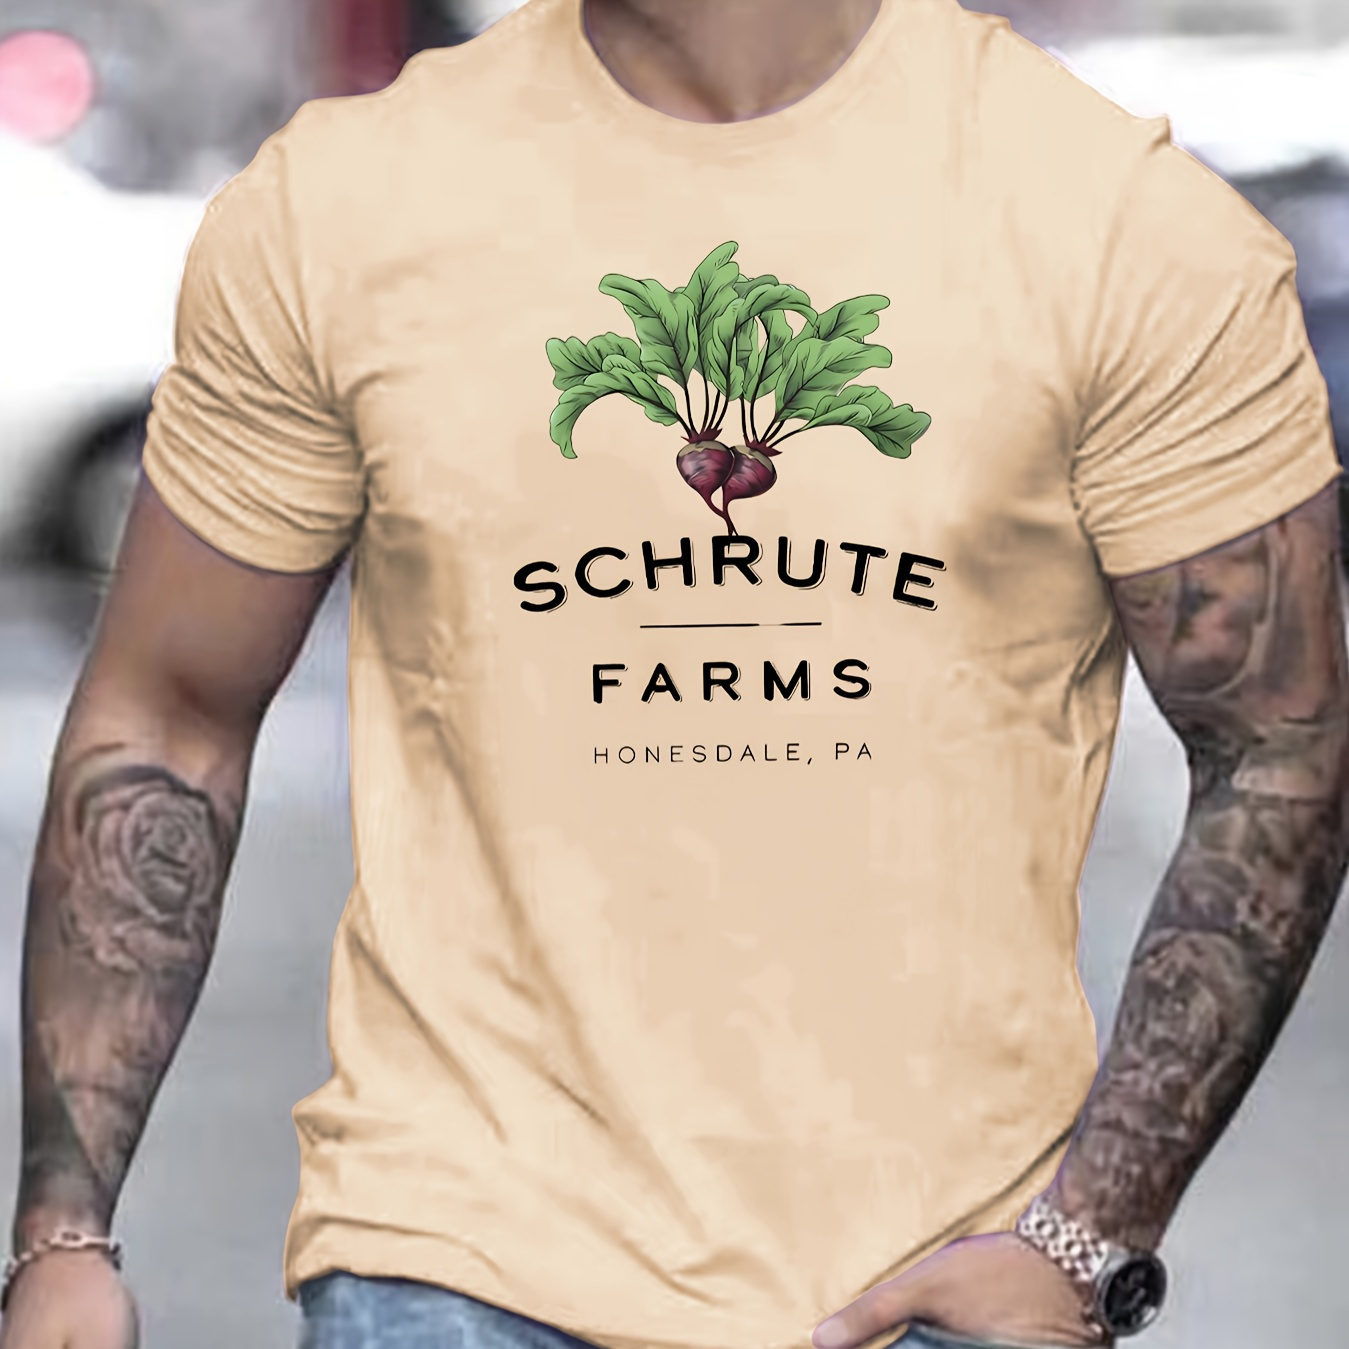 

Schrute Farms Print Men's Casual T-shirt, Short Sleeve Versatile Comfy Tee Tops For Summer Outdoor